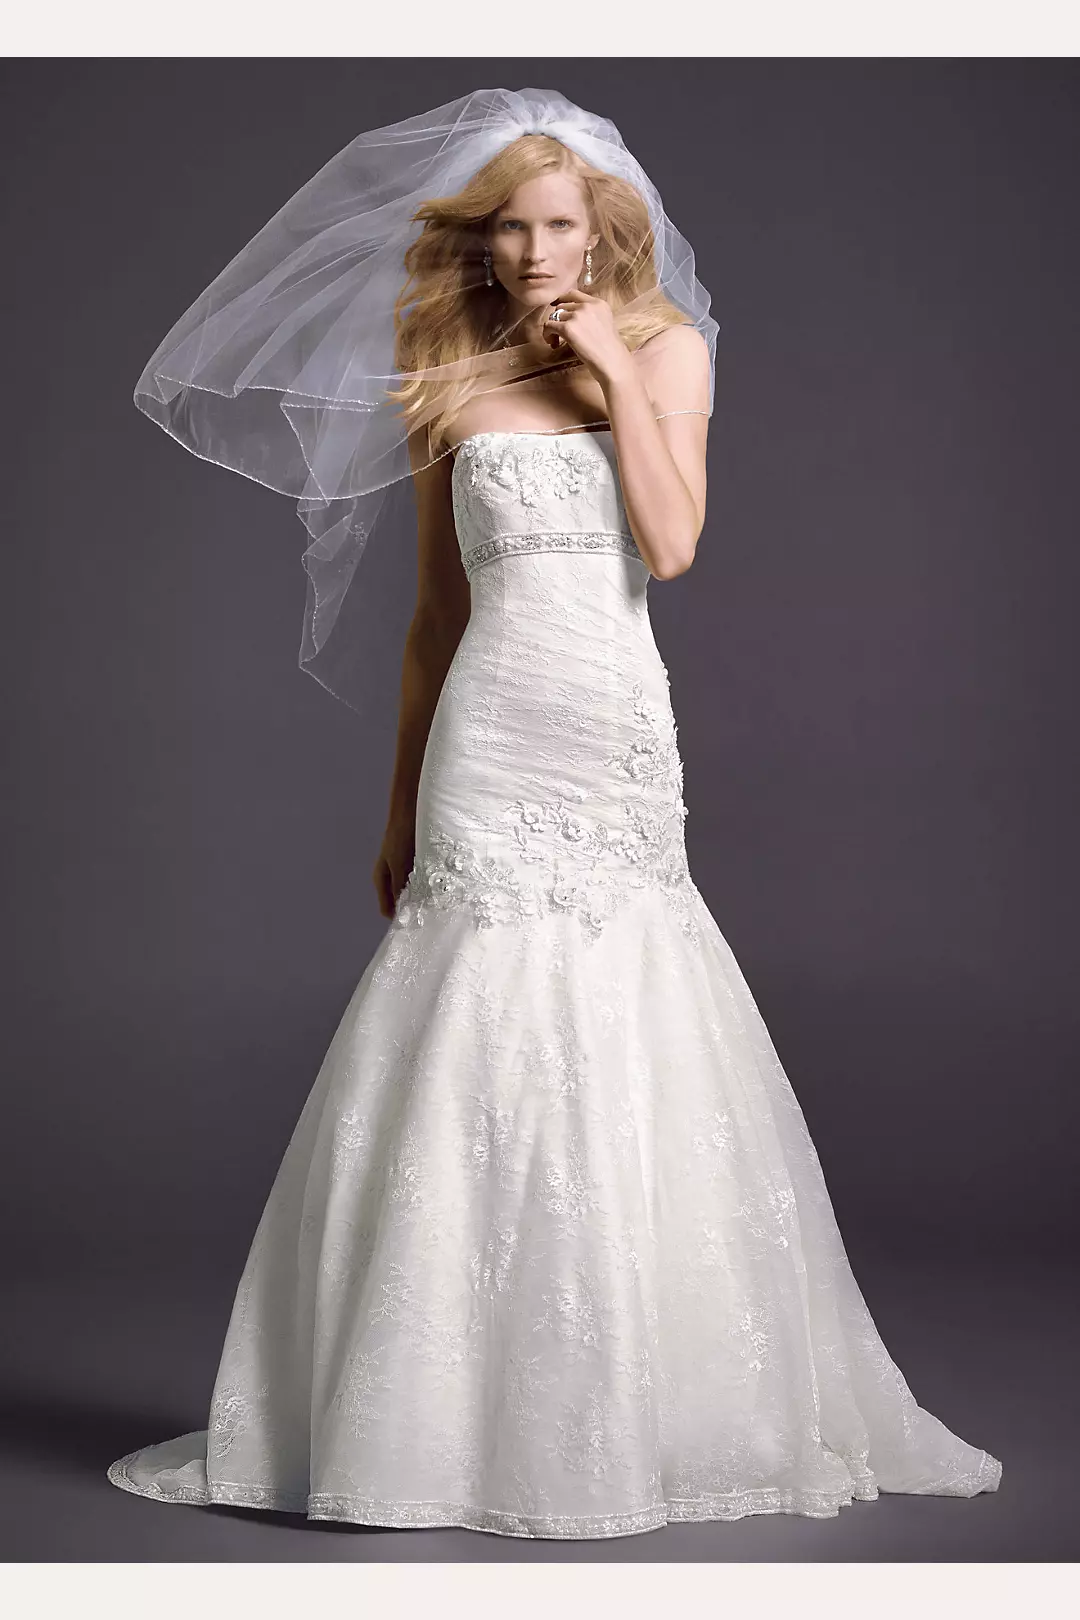 Petite Lace Wedding Dress with Floral Details Image